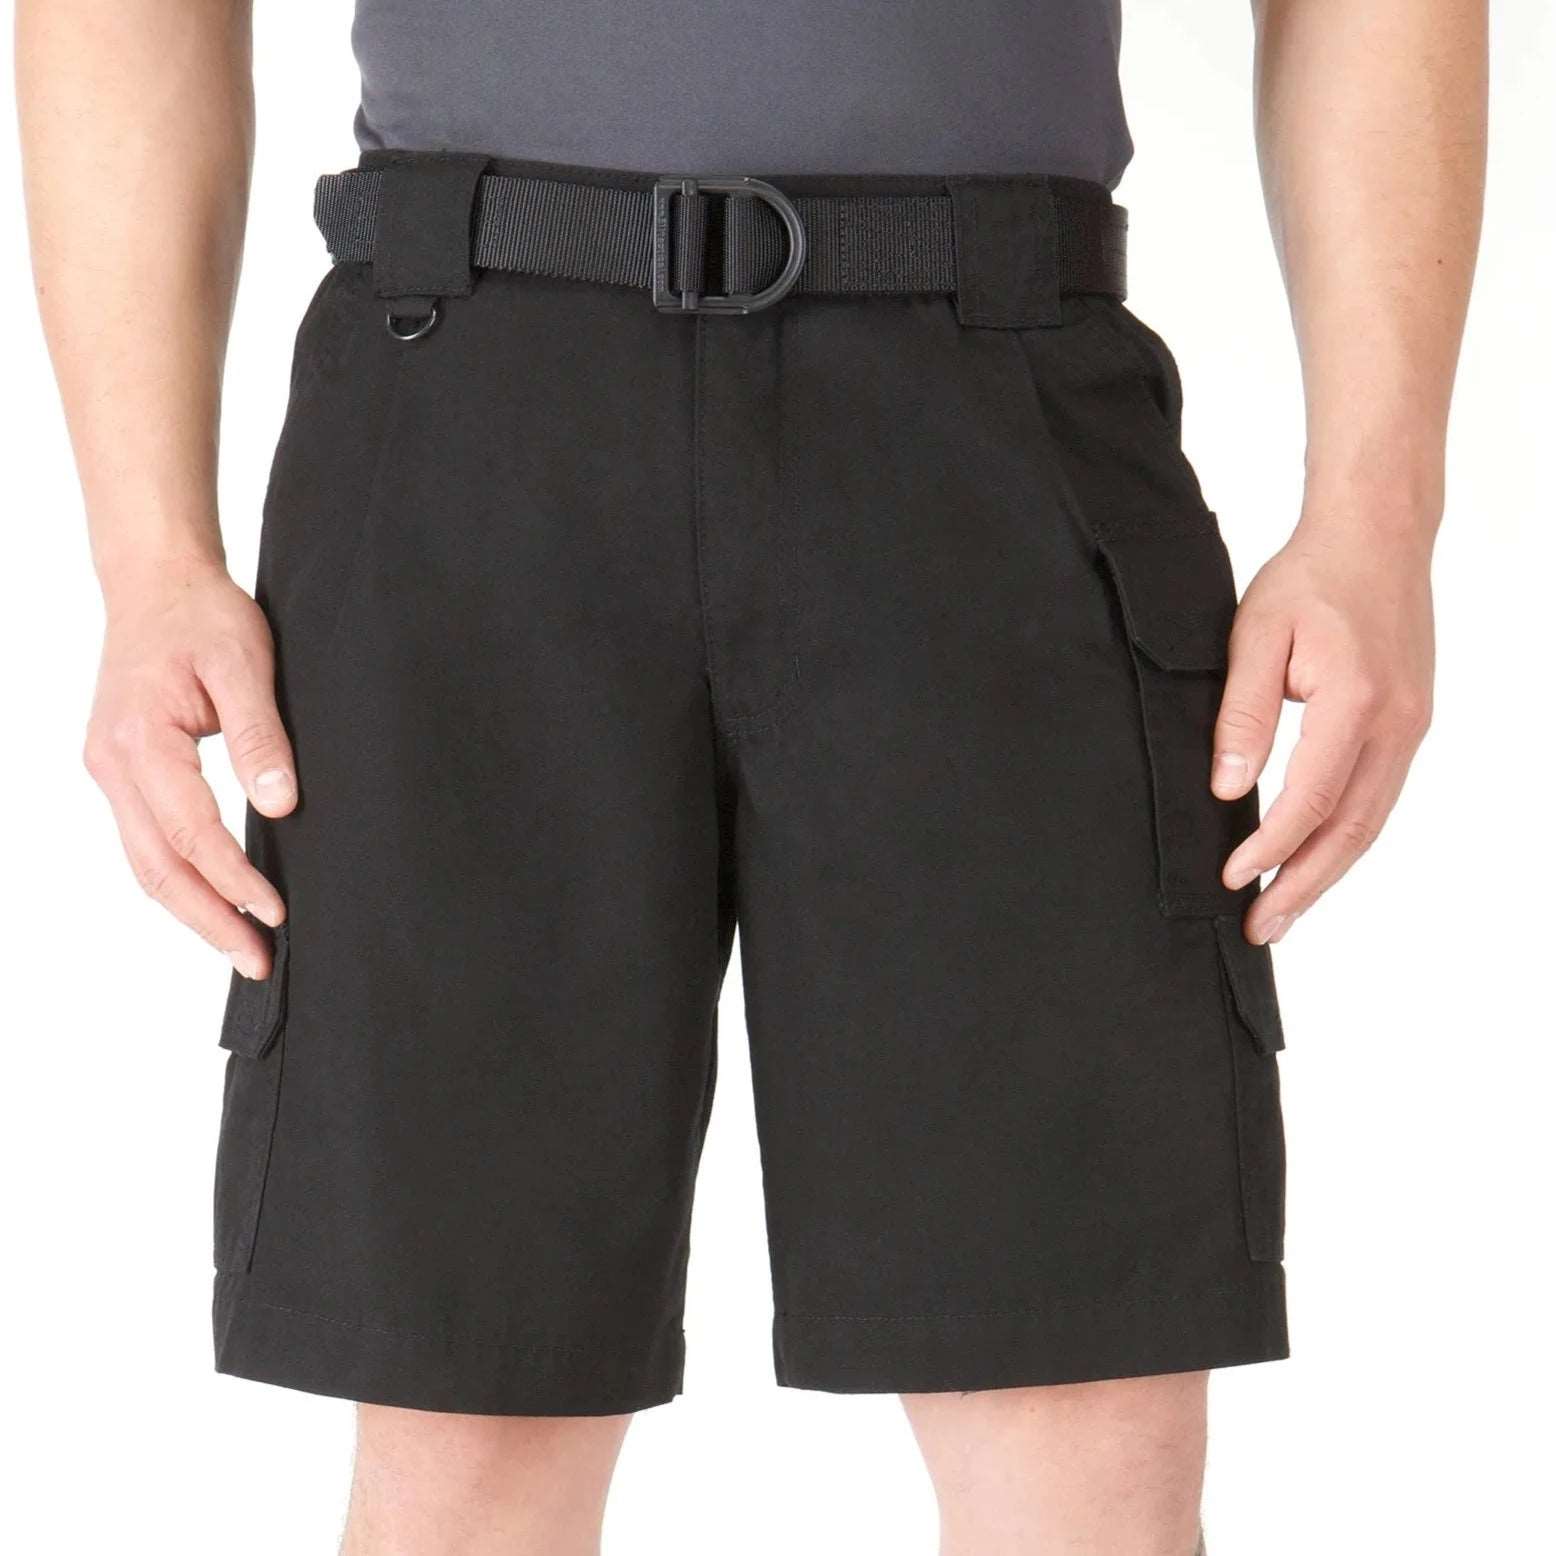 Shorts - 5.11 Tactical 9" Cotton Canvas Shorts